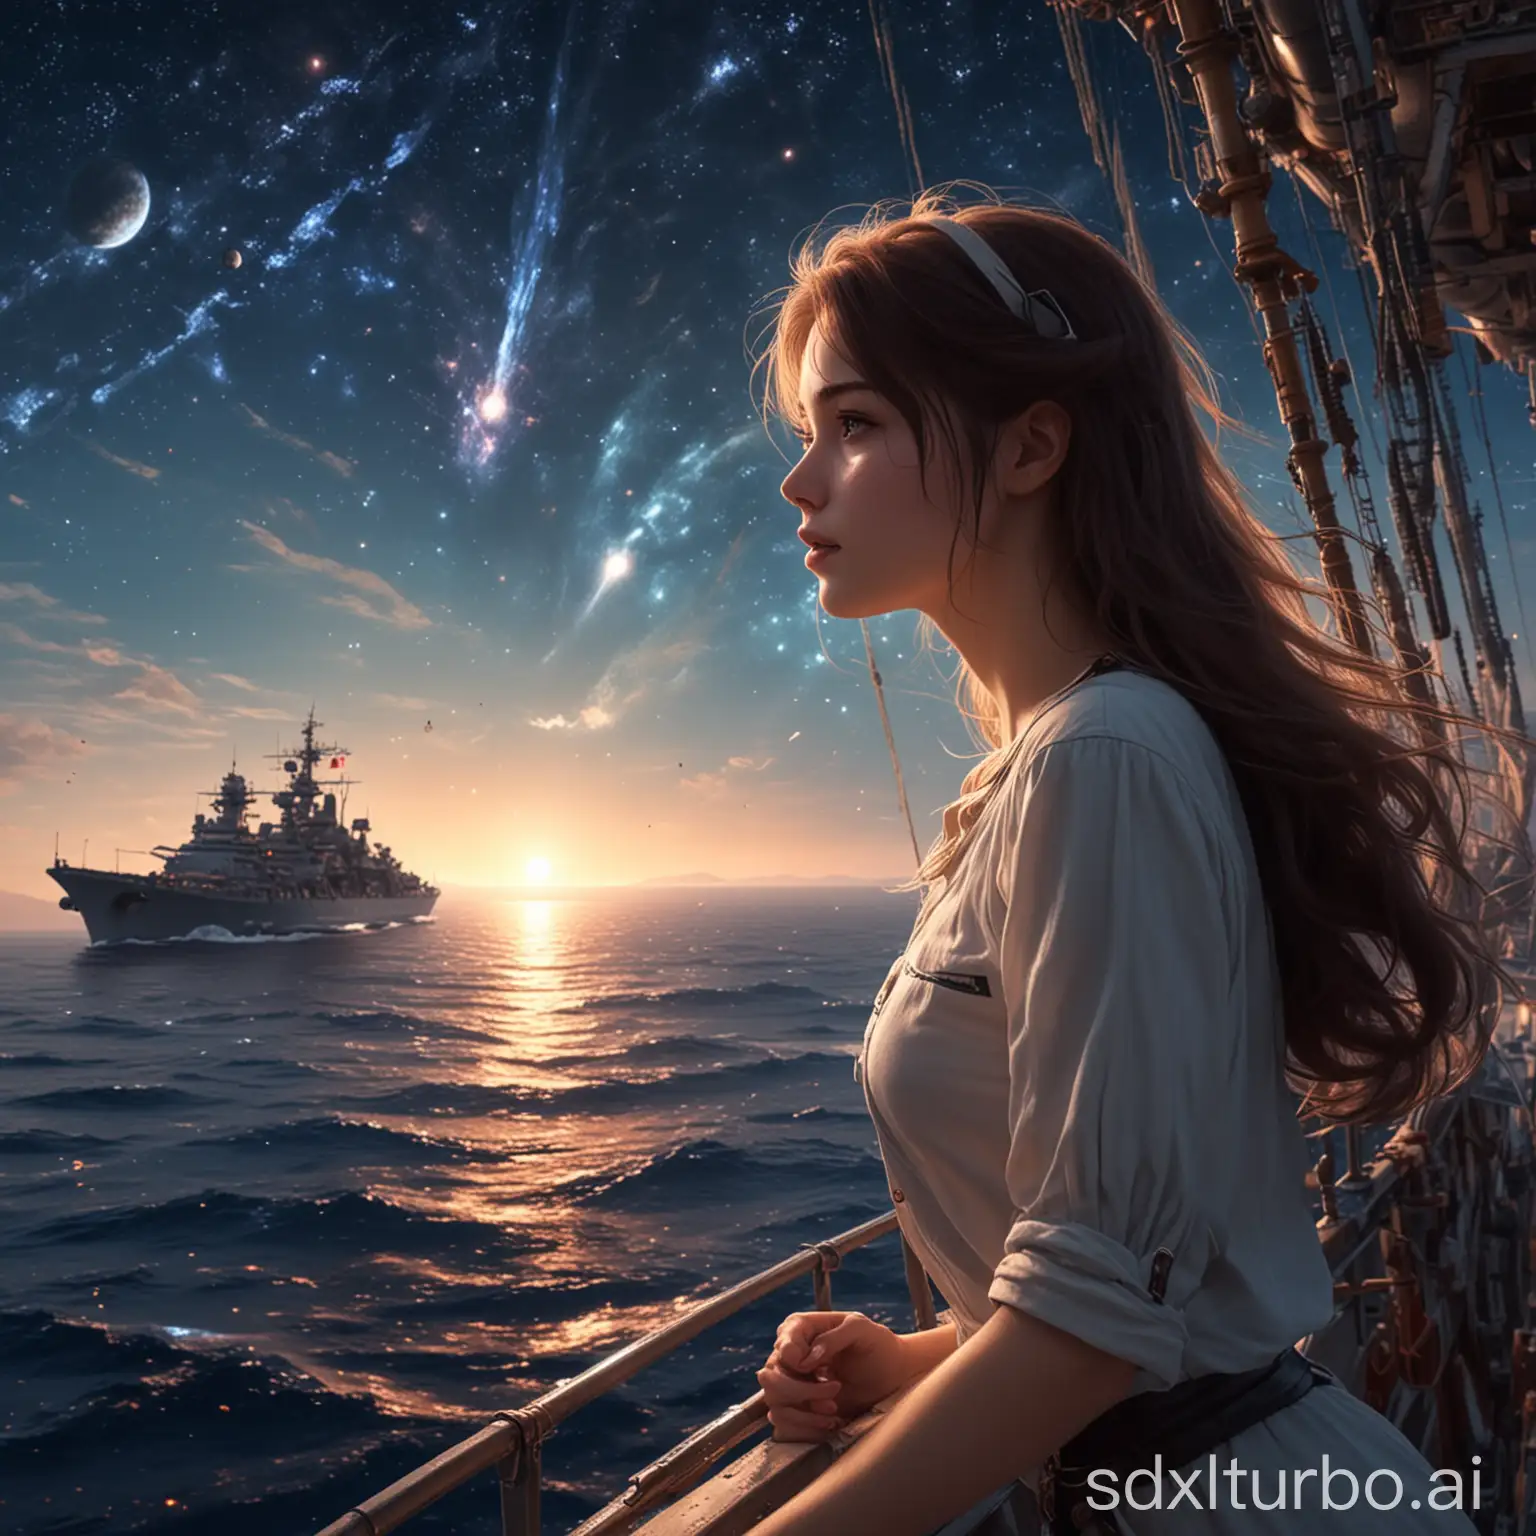 beautiful universe across warships run, gentle breeze, girl